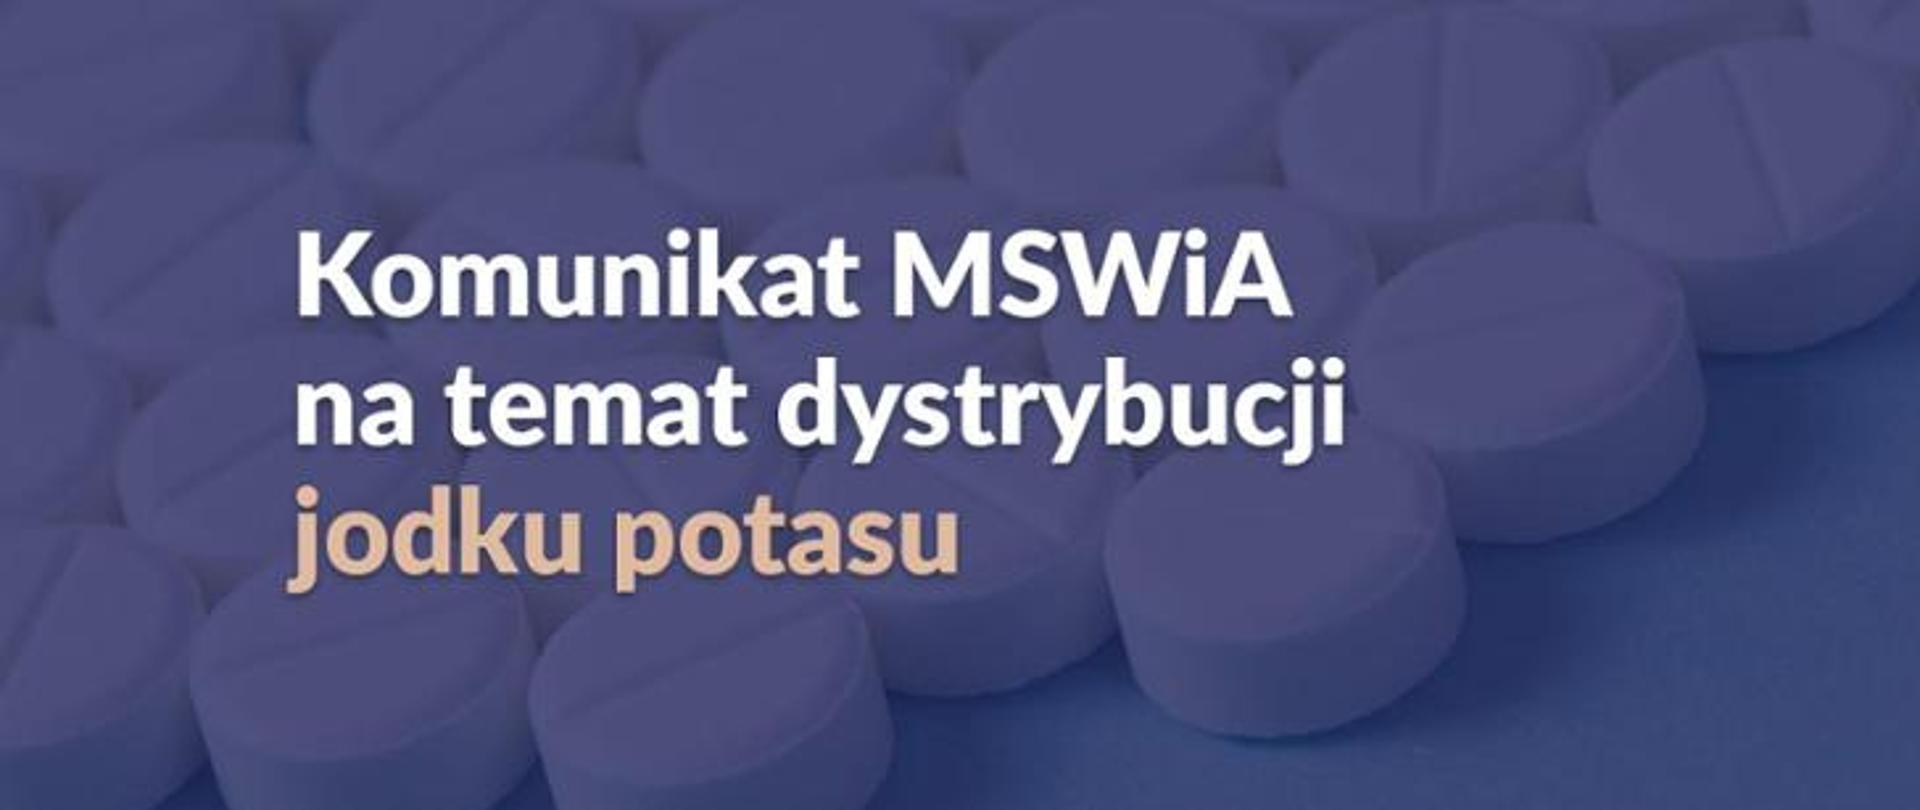 Napis - Komunikat MSWiA na temat dystrybucji jodku potasu